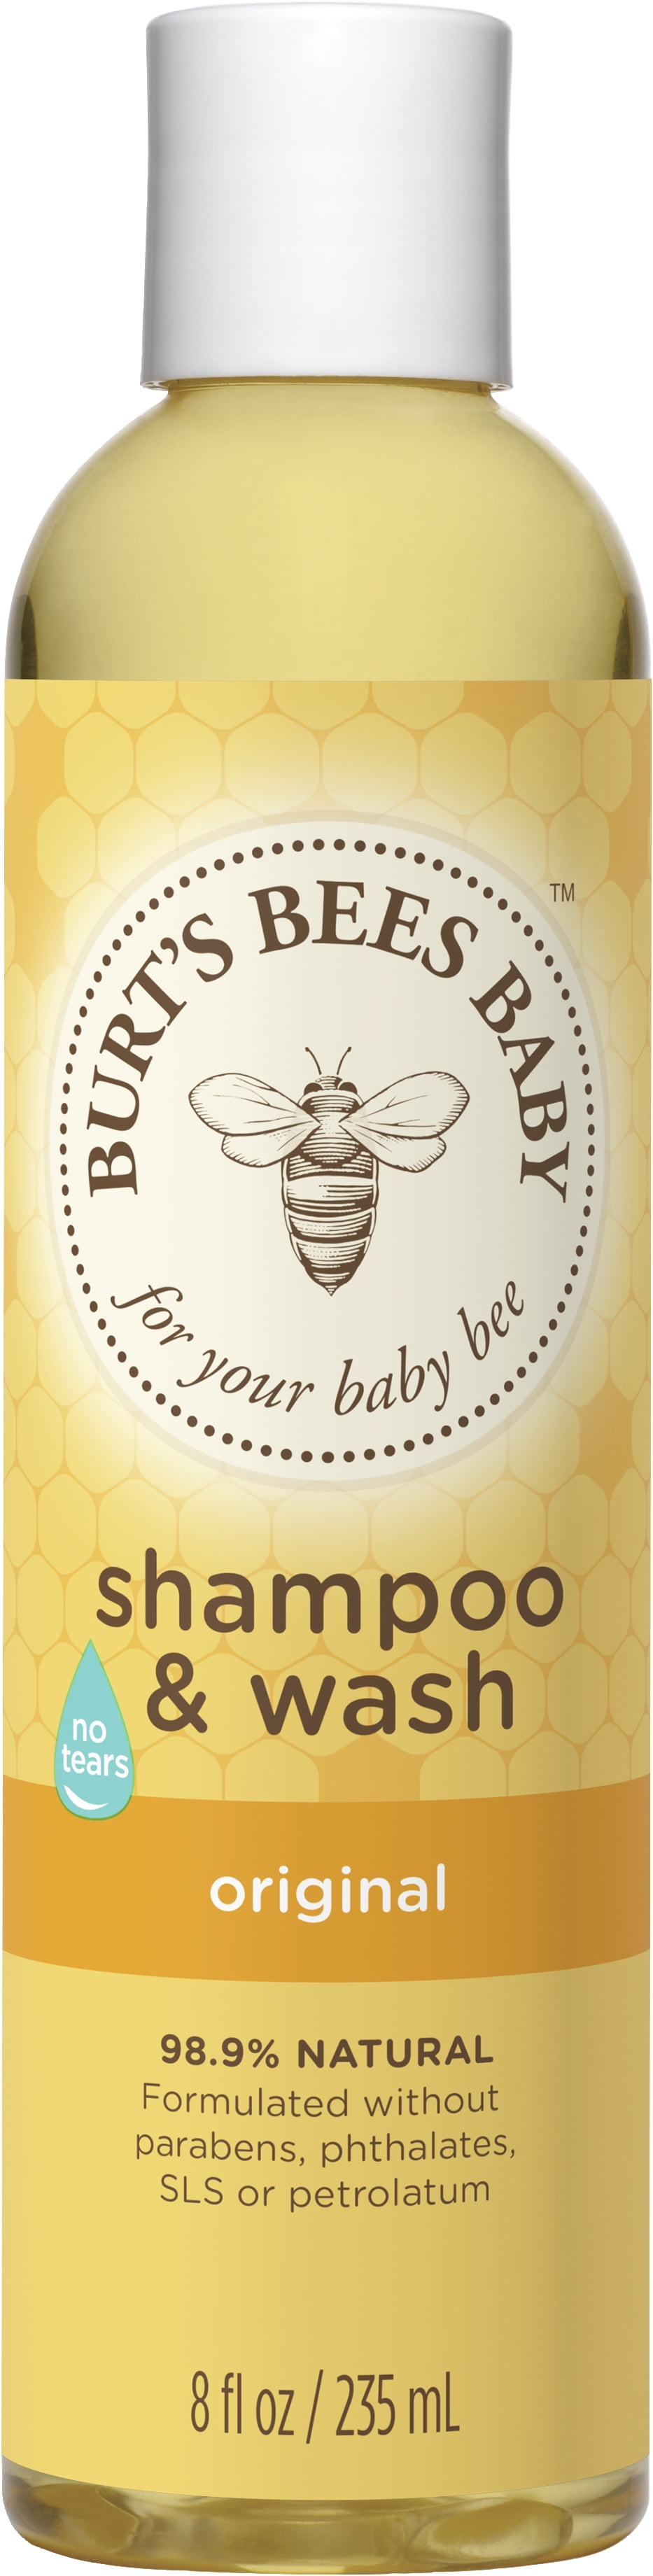 baby shampoo without sulfates